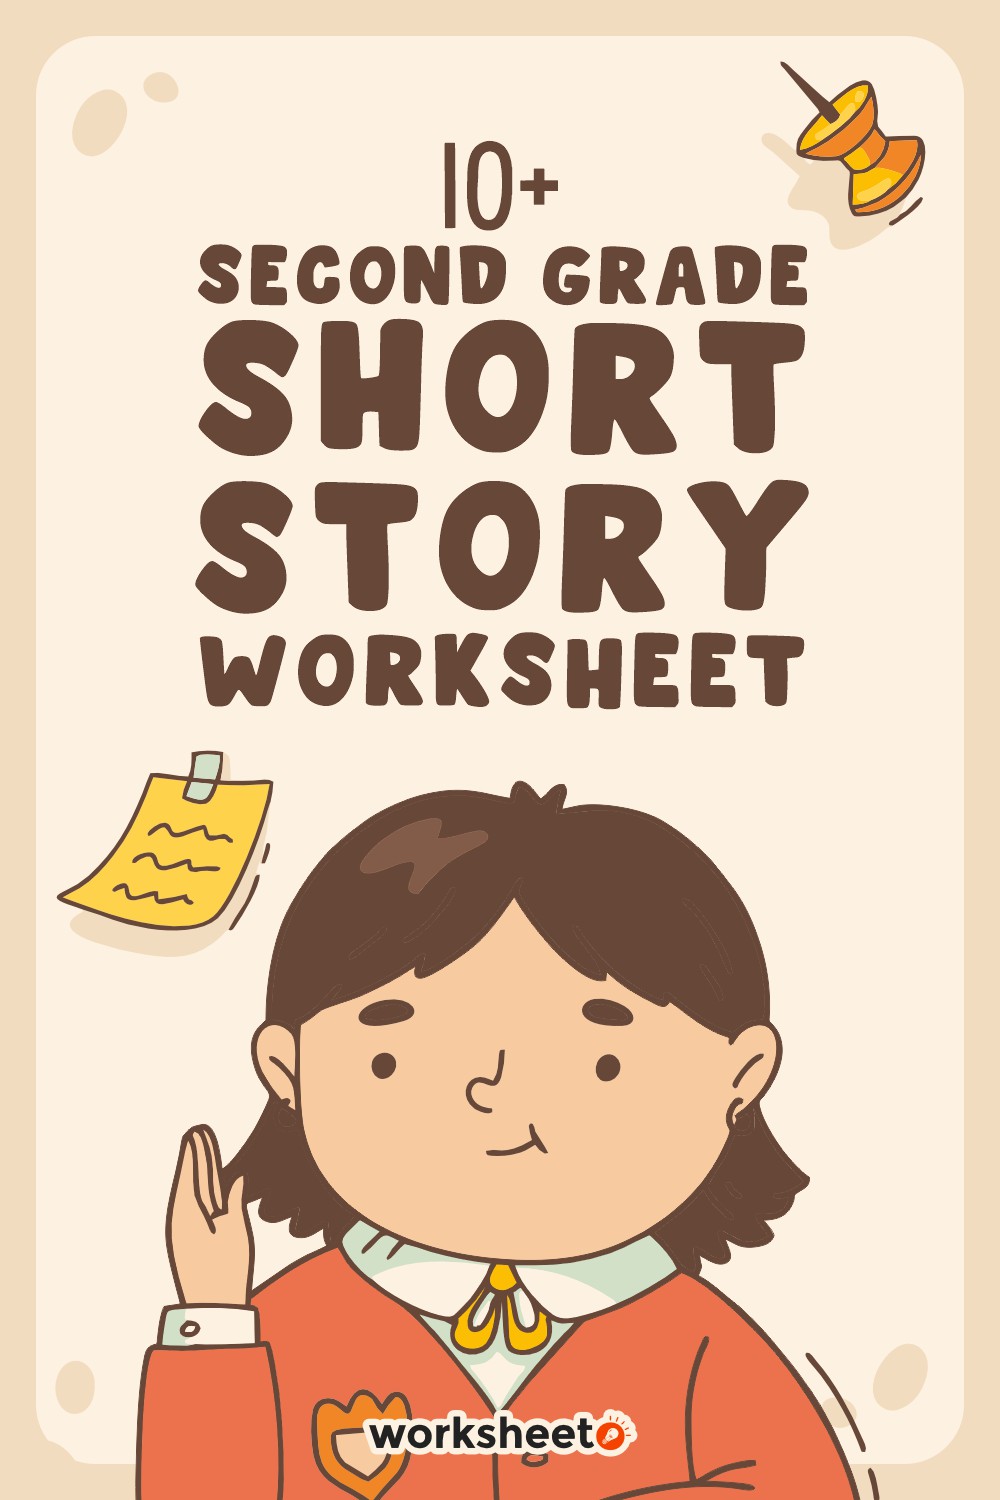 Second Grade Short Story Worksheet